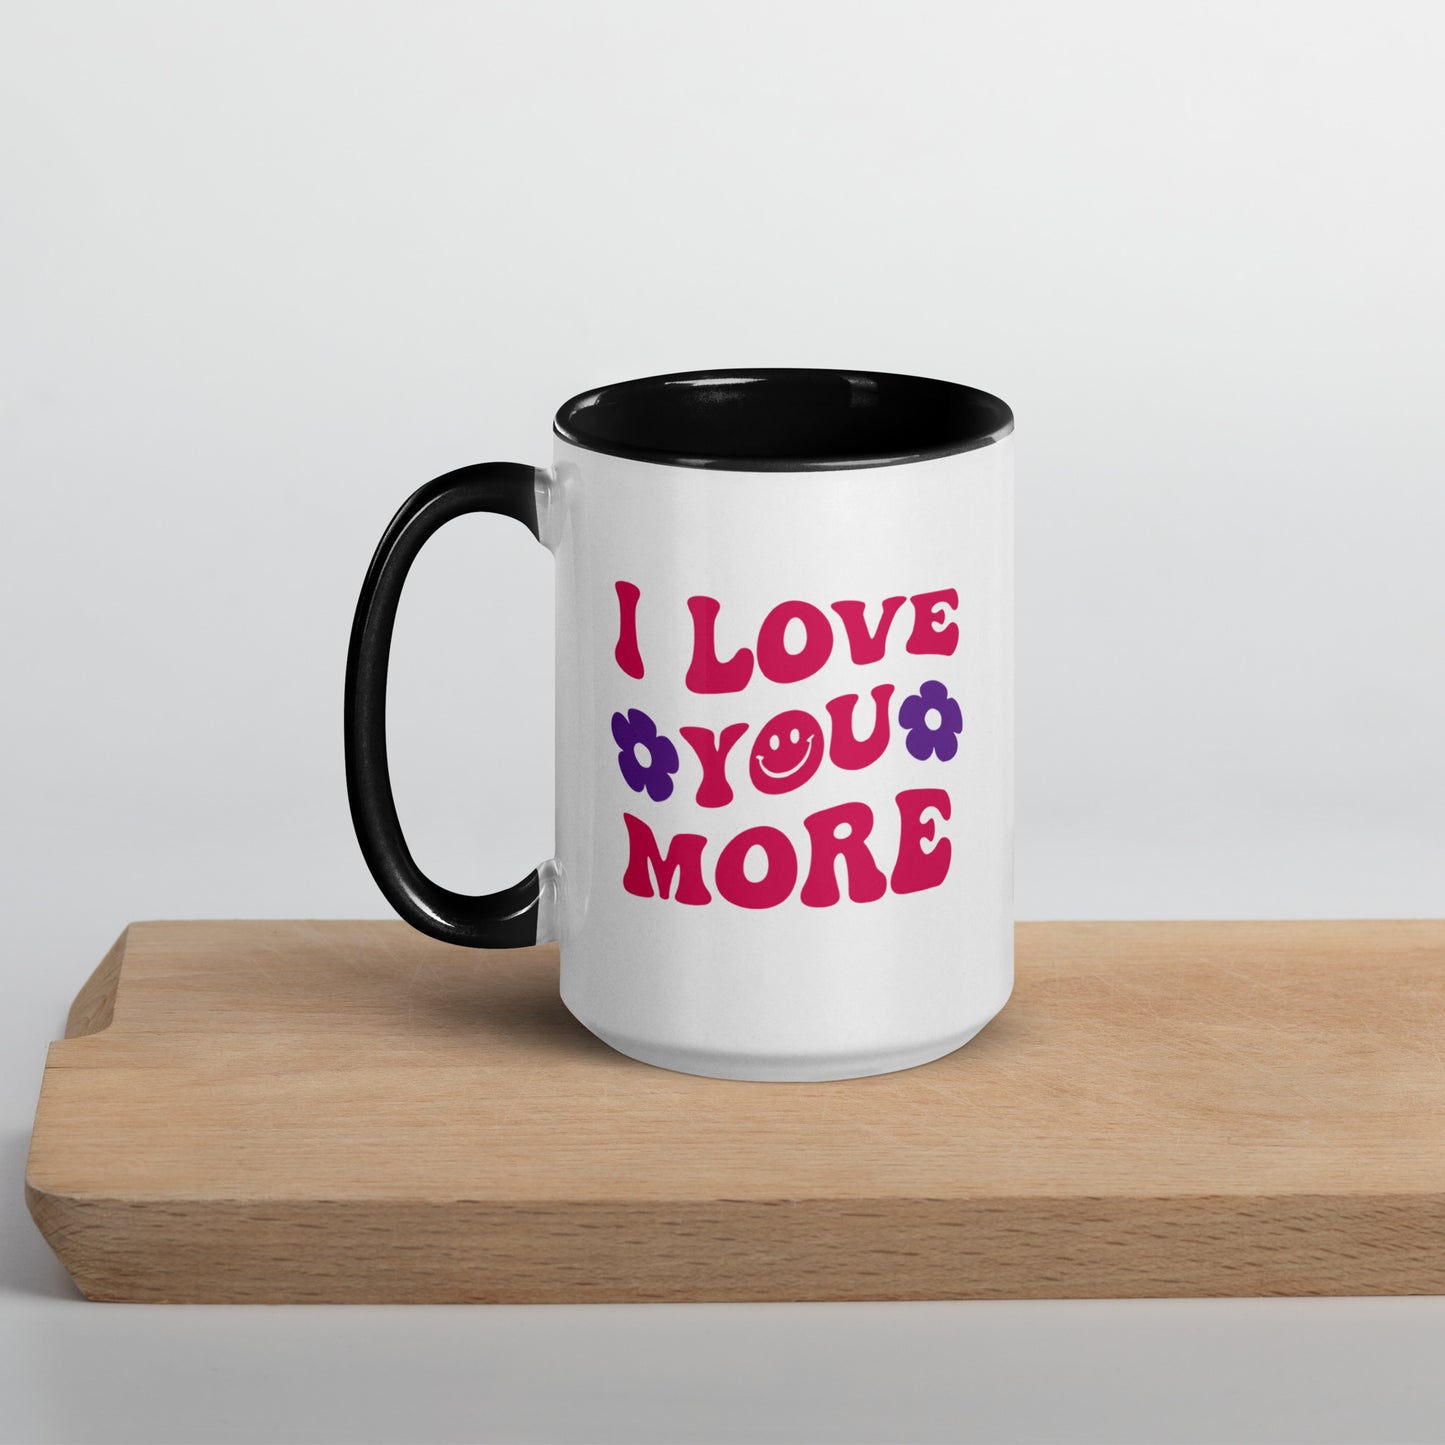 I Love You More Mug with Color Inside